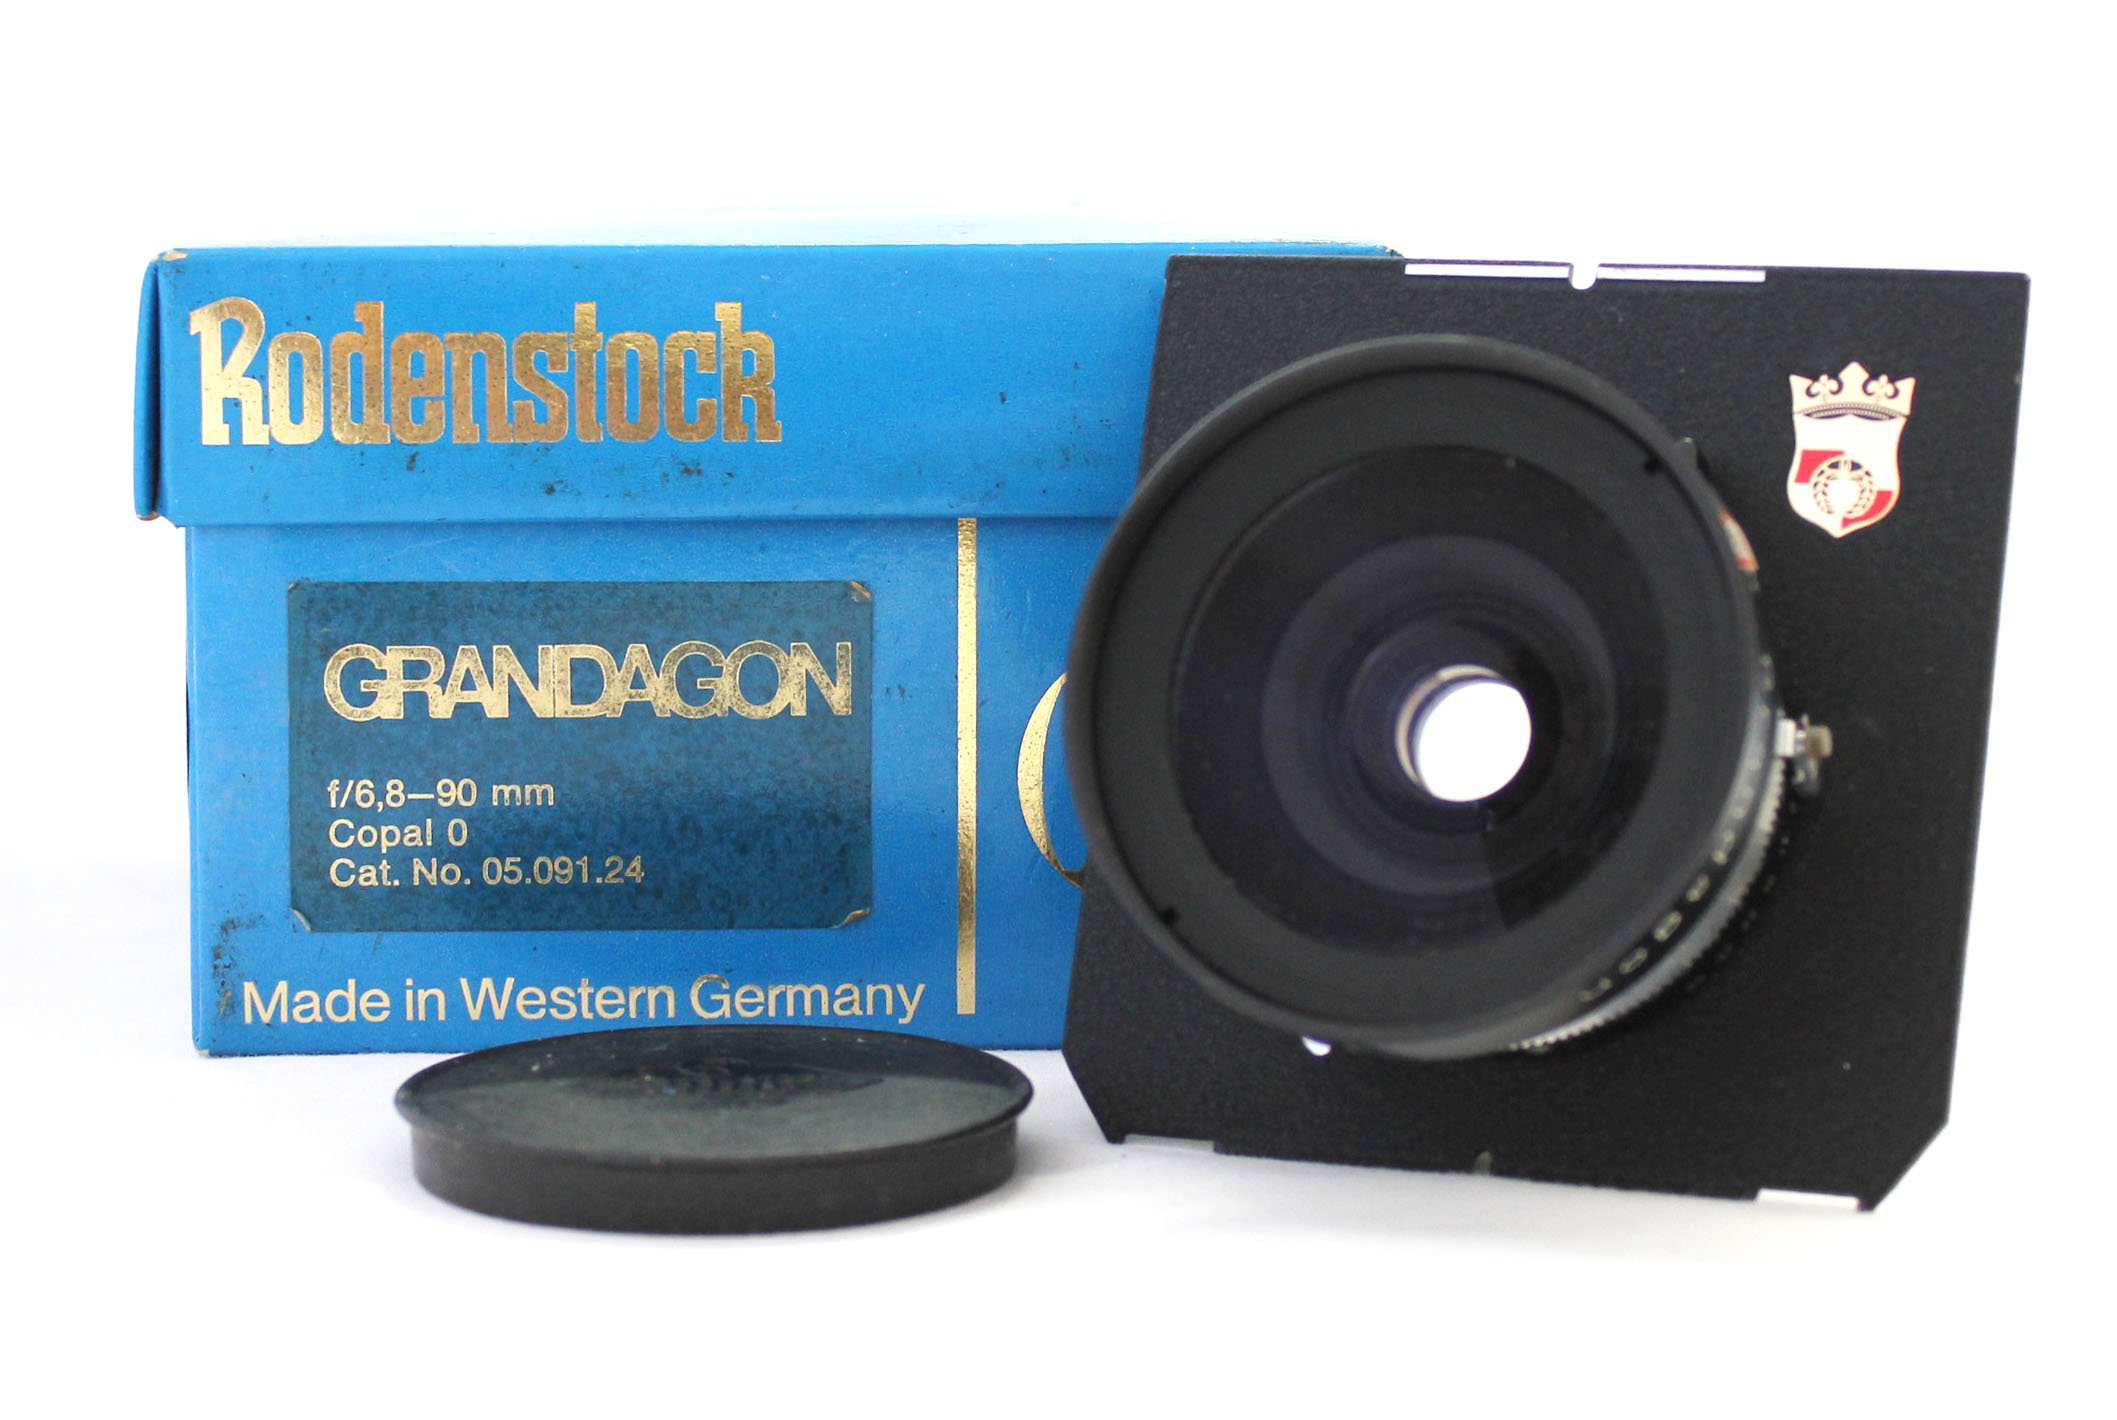 Rodenstock Grandagon 90mm F/6.8 Lens Copal No.0 Shutter in Box from Japan